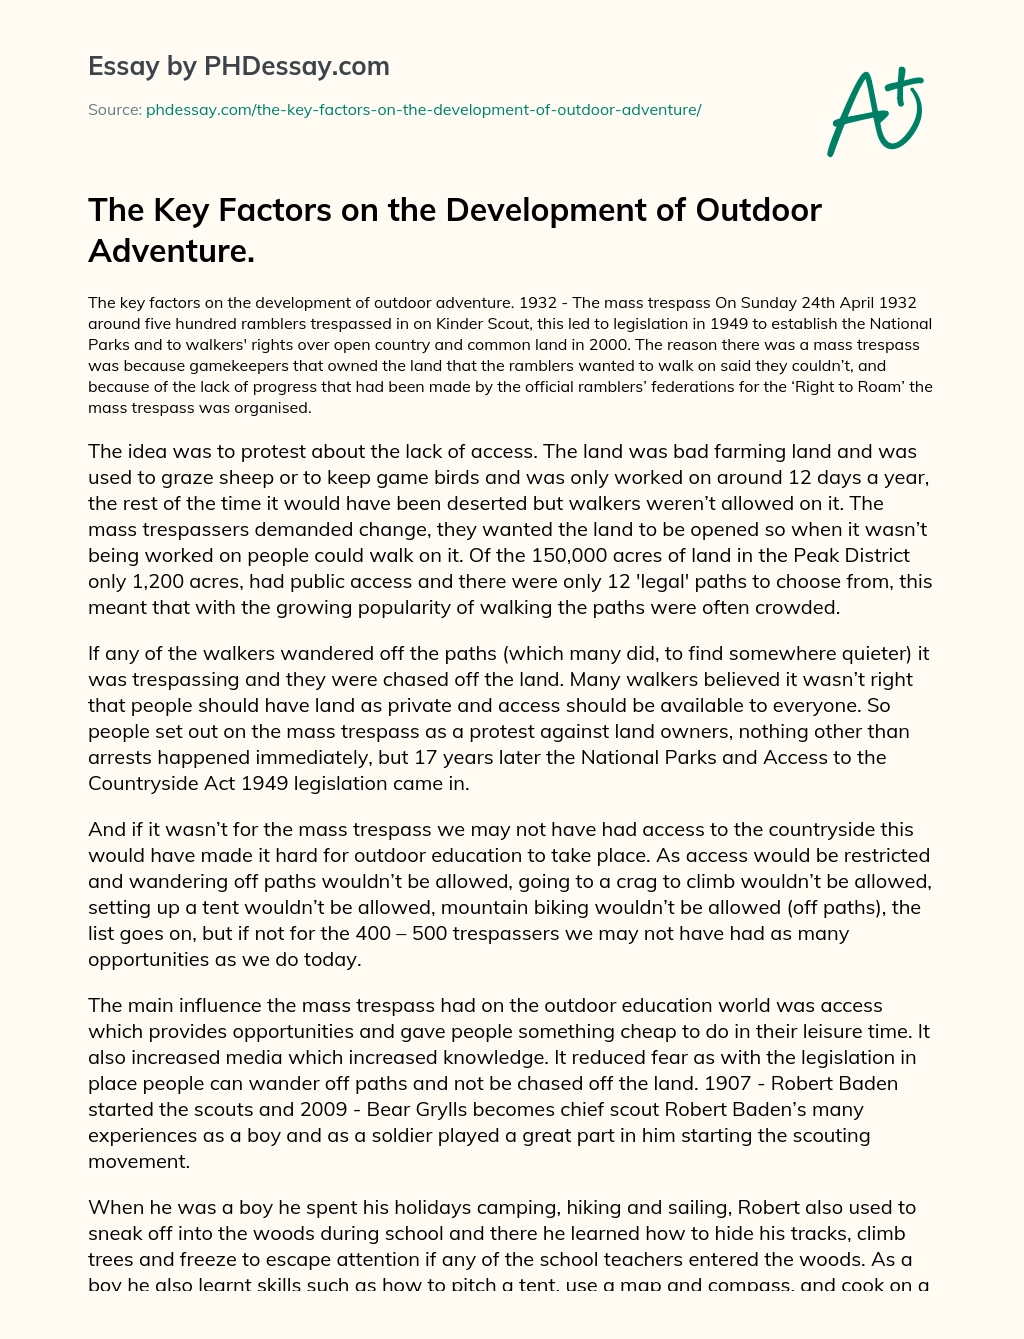 The Key Factors on the Development of Outdoor Adventure. essay